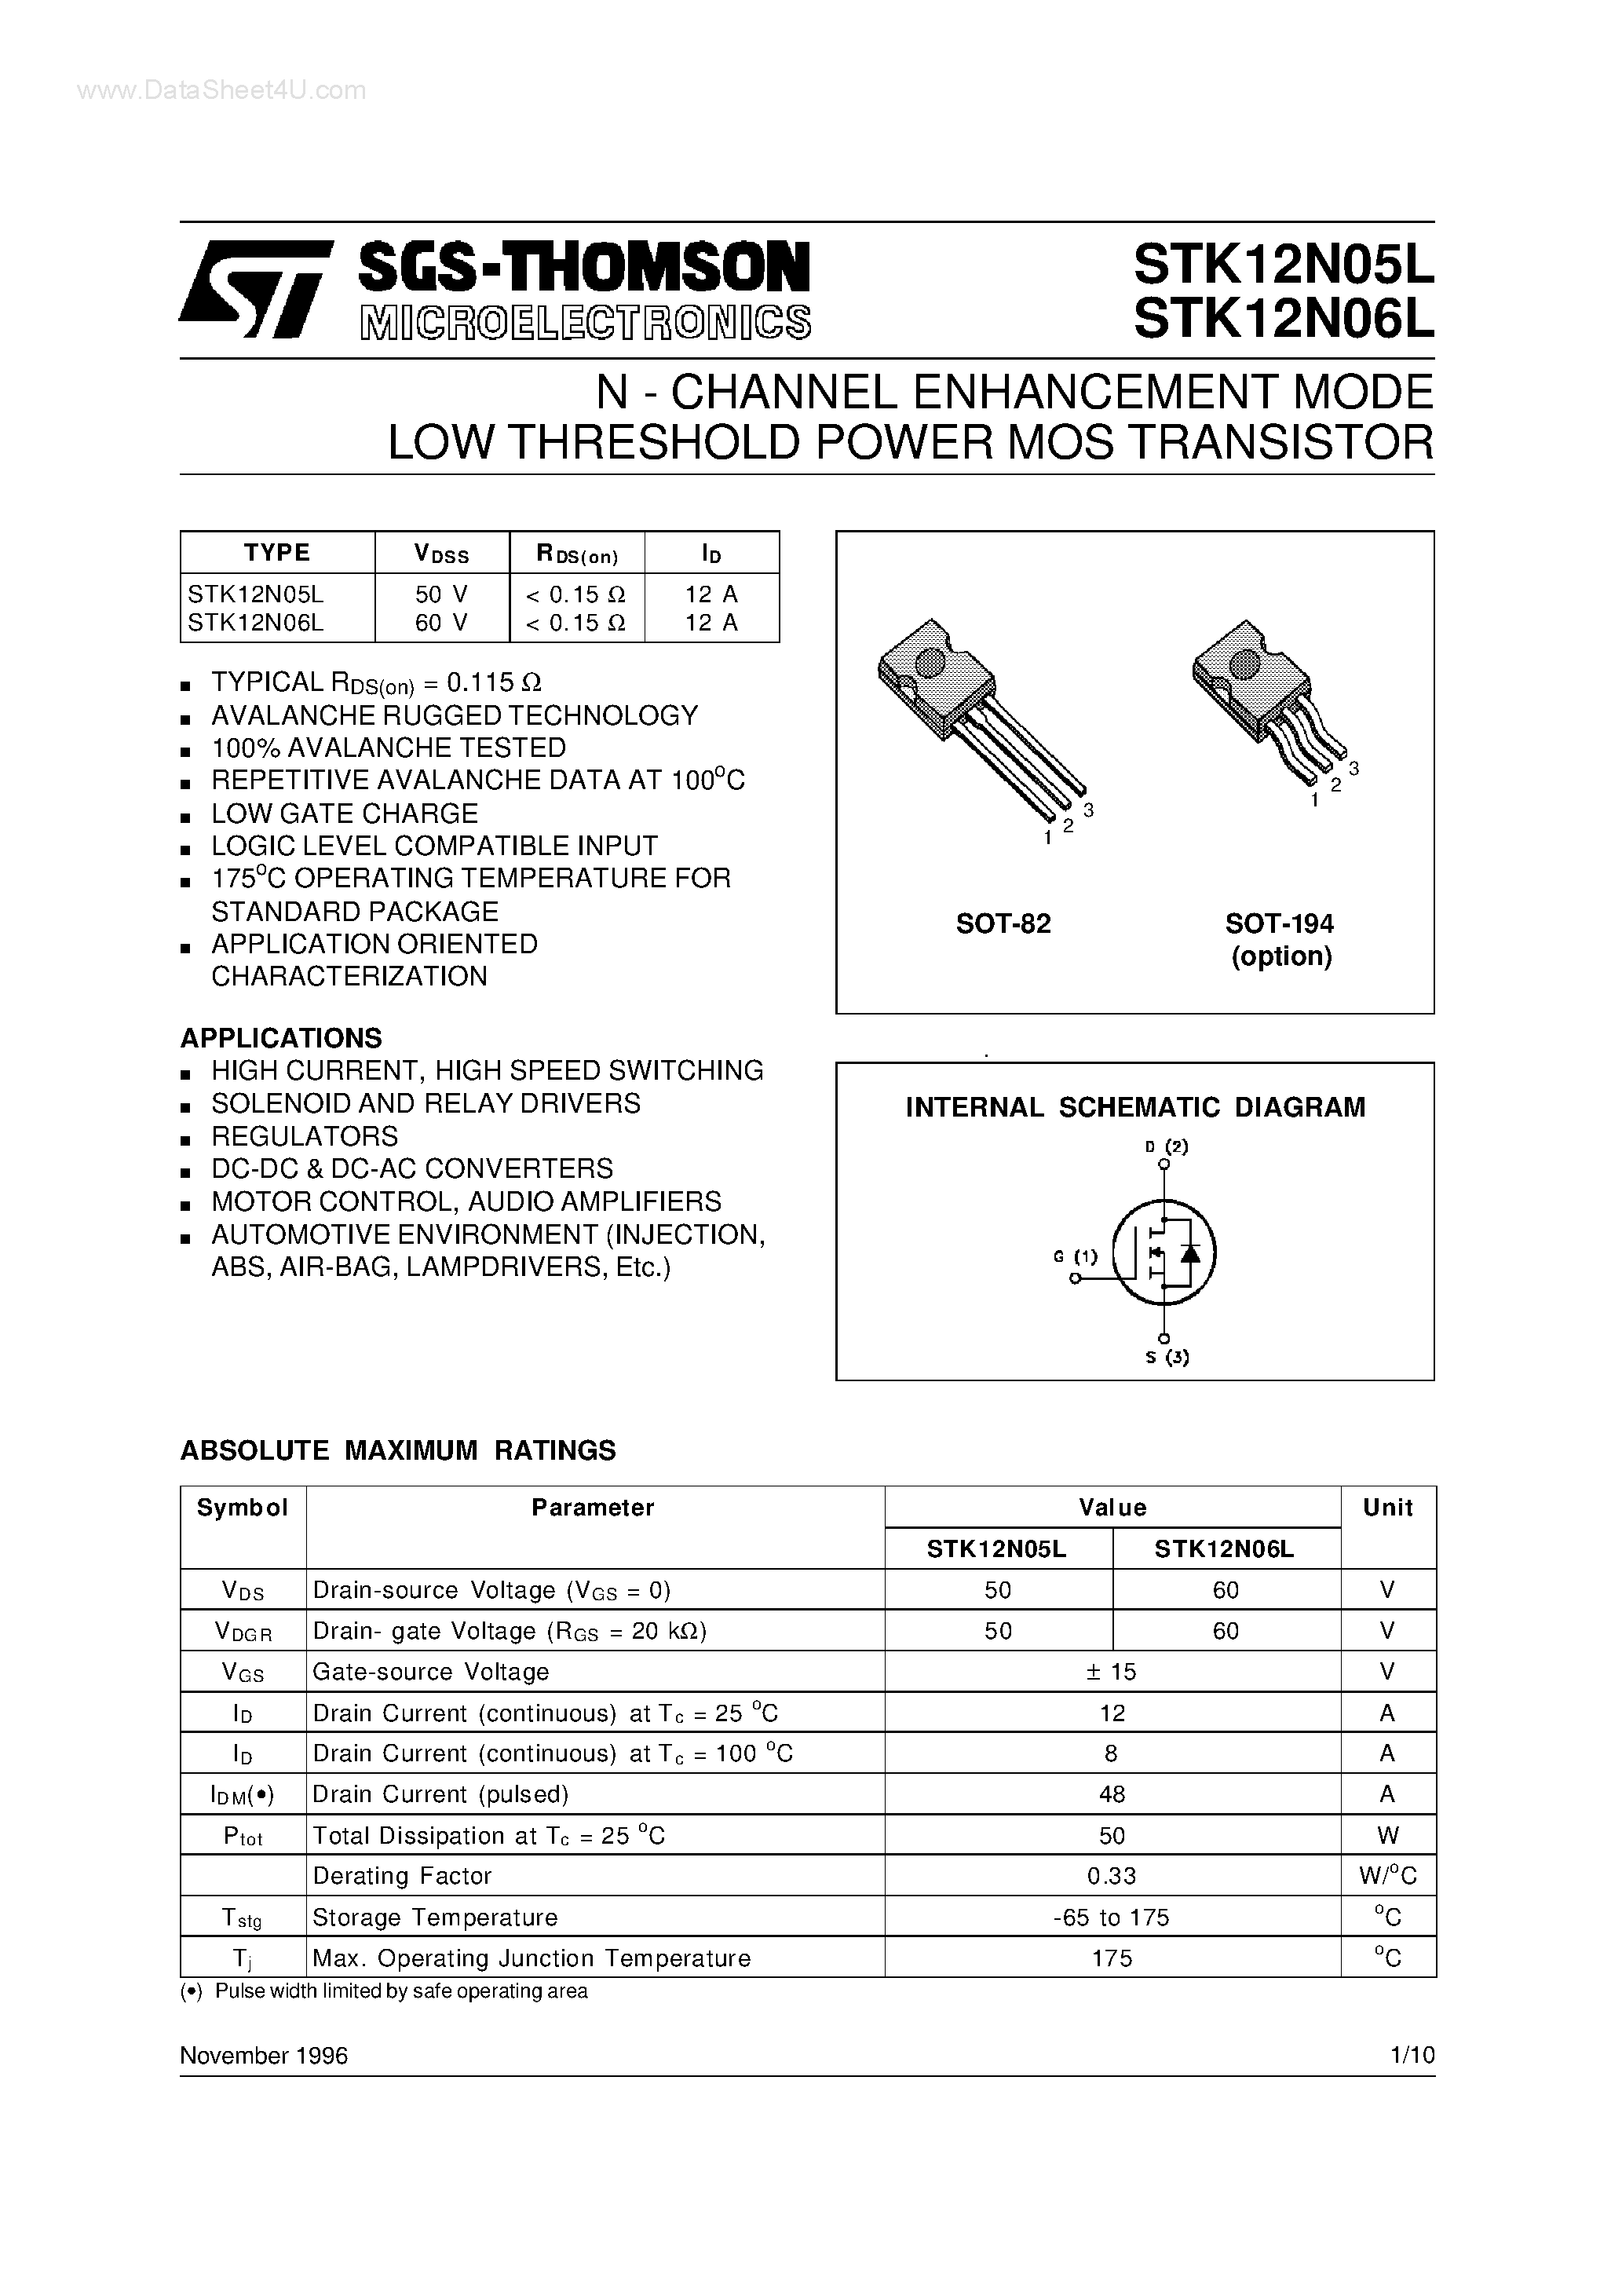 Datasheet STK12N05L - (STK12N05L / STK12N06L) N - CHANNEL ENHANCEMENT MODE LOW THRESHOLD POWER MOS TRANSISTOR page 1